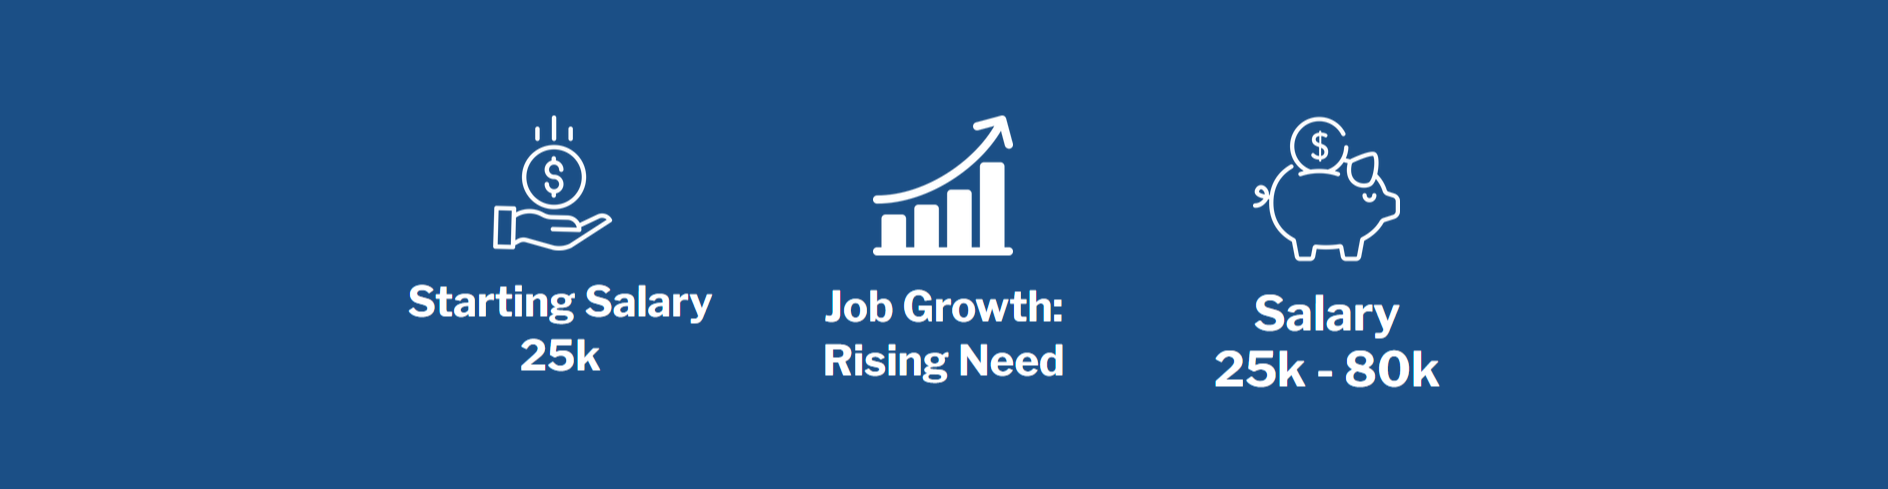 Starting Salary ​25k graph upward Picture Job Growth: Rising Need piggy bank Picture Salary 25k - 80k